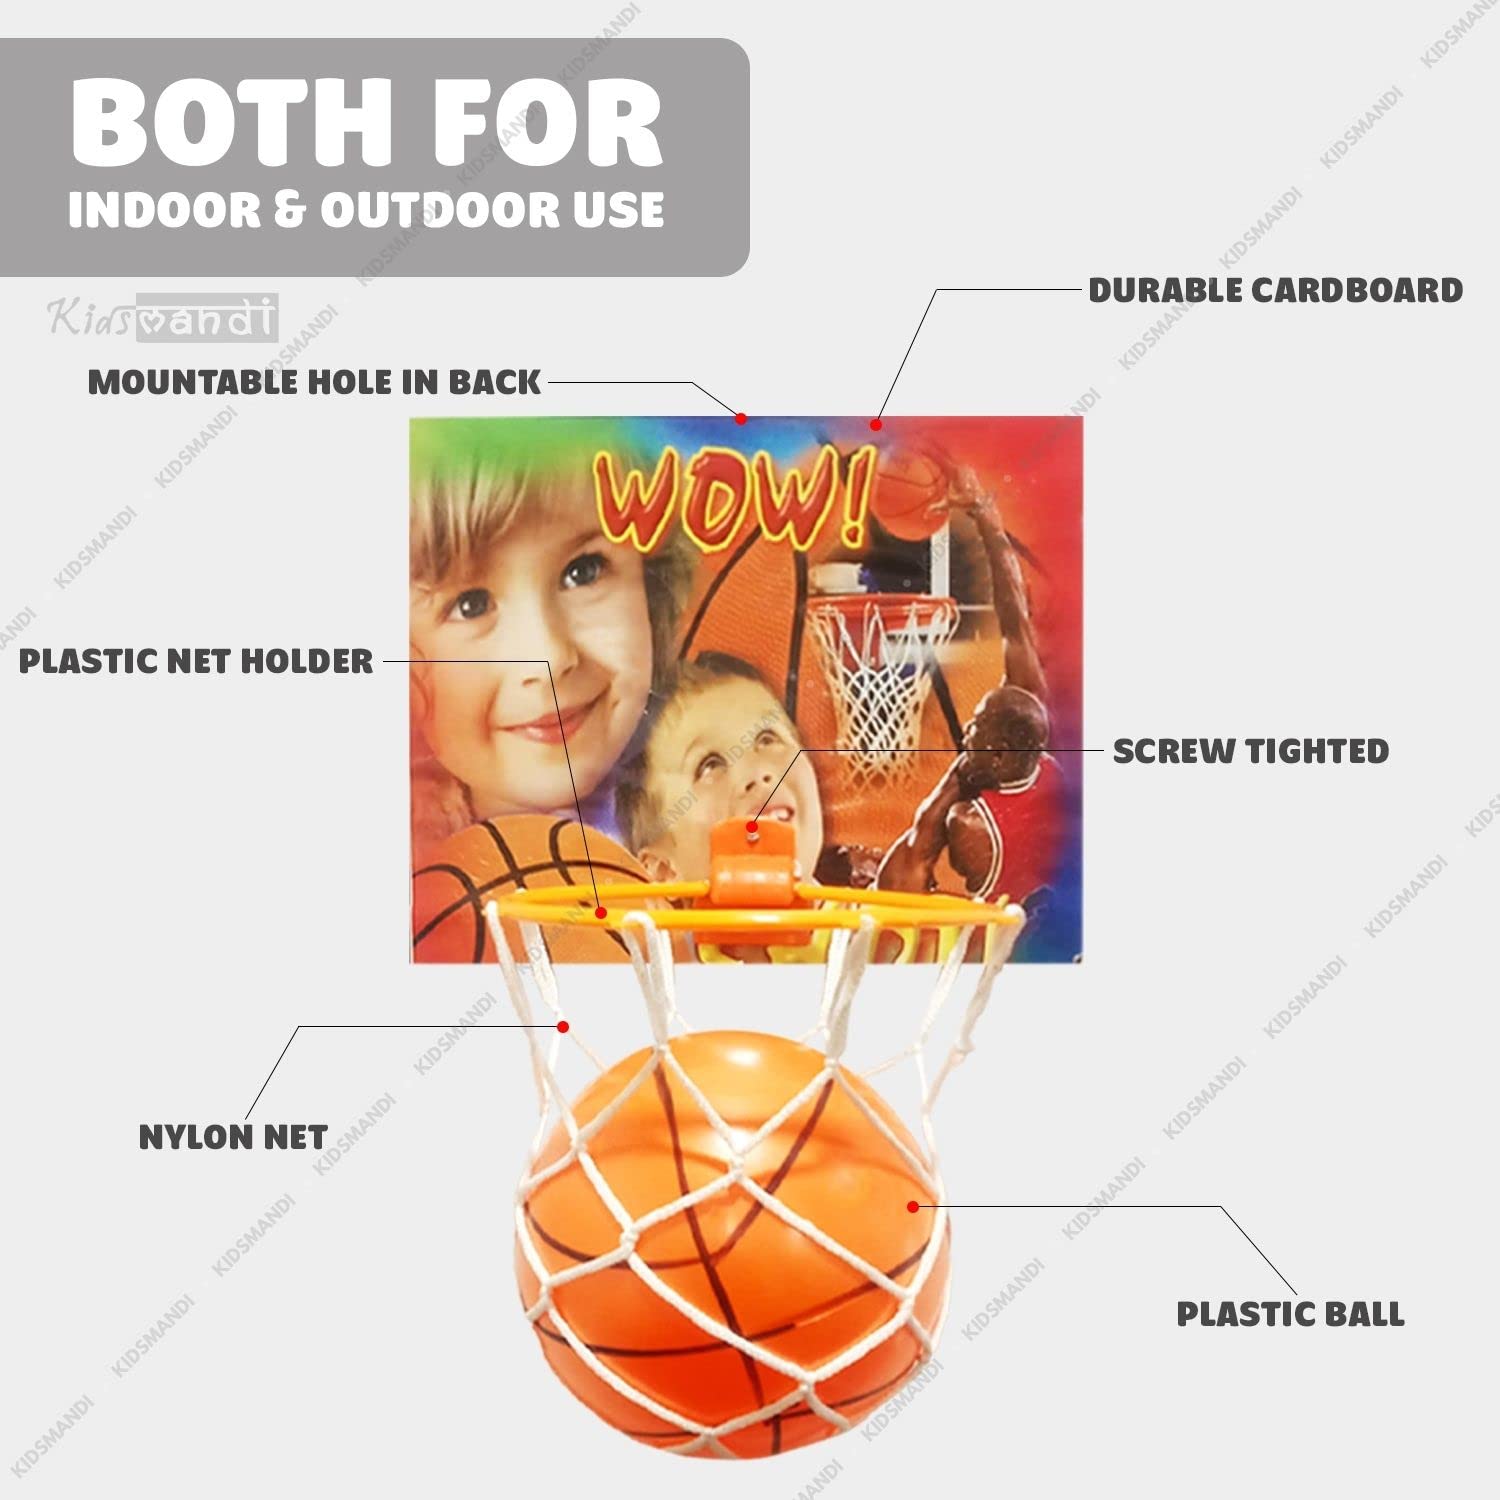 Kids Mandi plastic basketball toys for kids, portable hoop game.